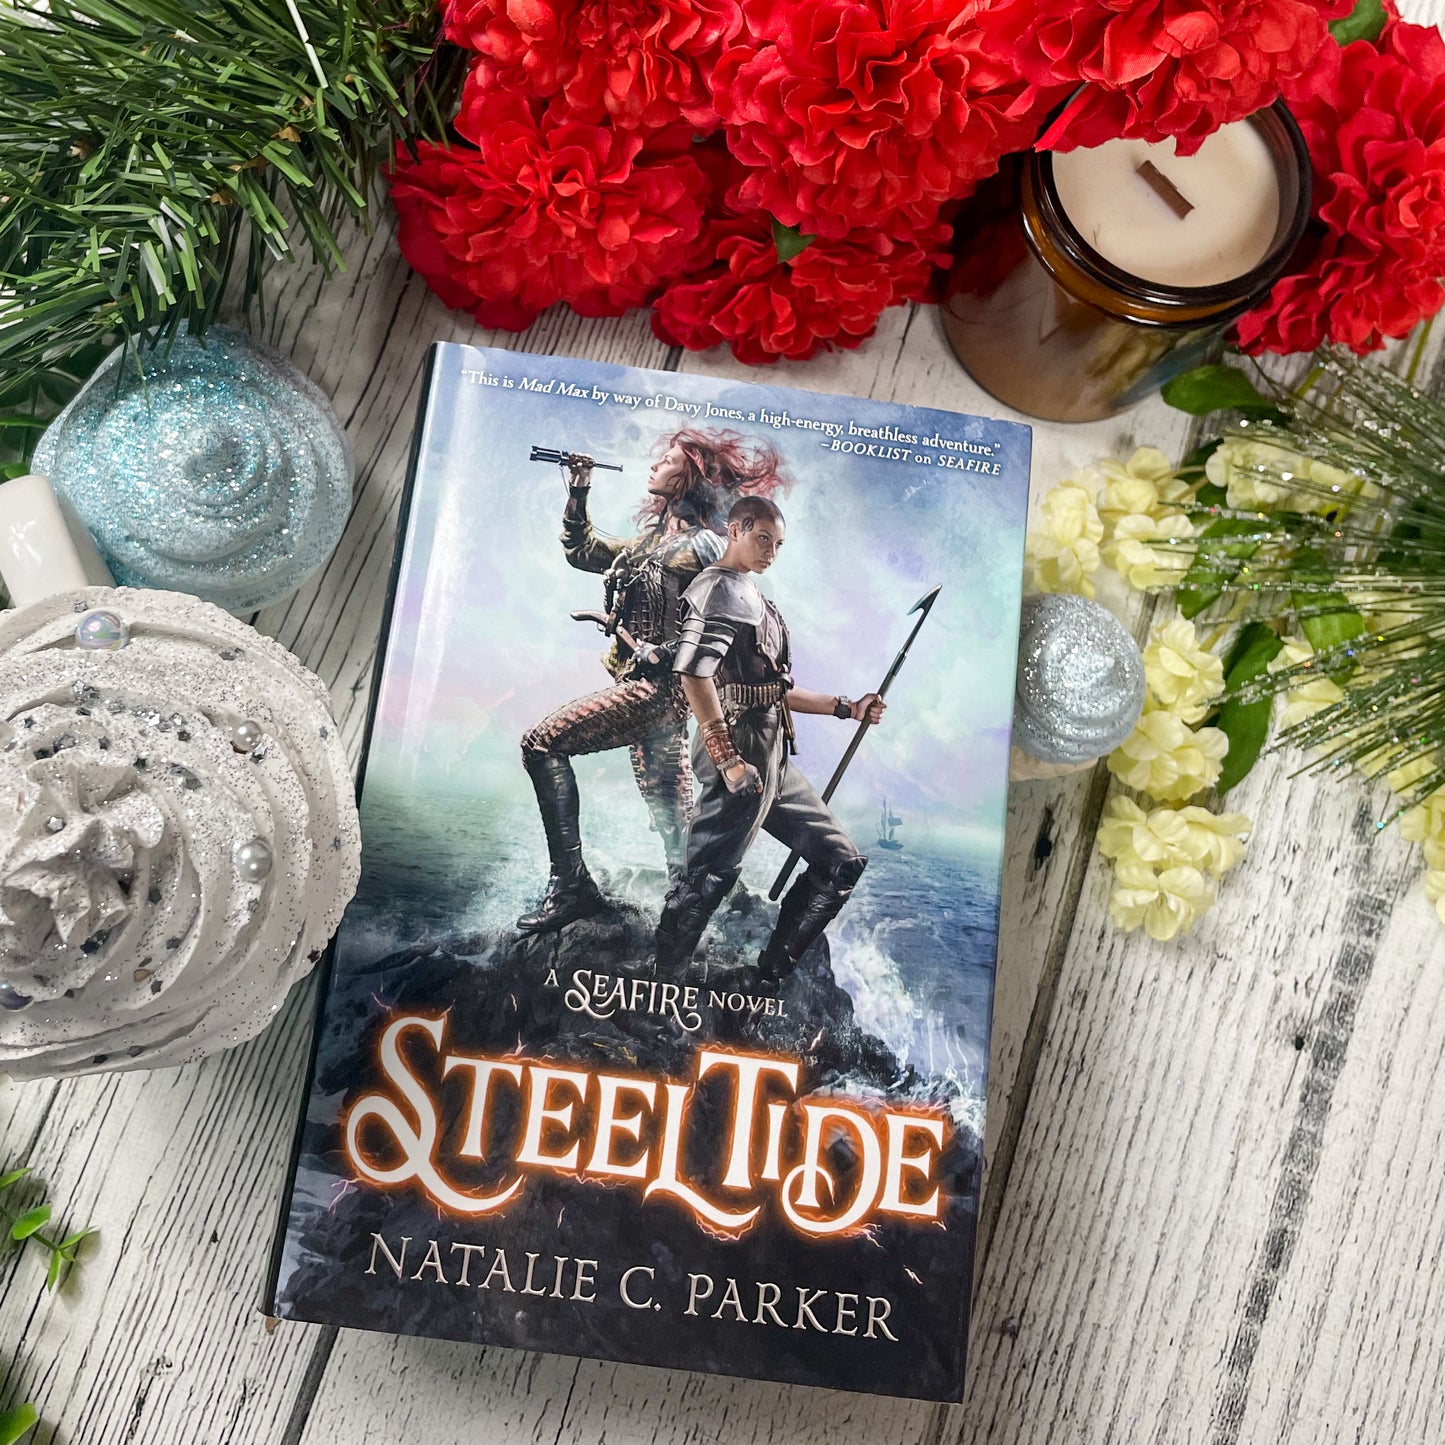 Steel Tide (Seafire #2) by Natalie C. Parker